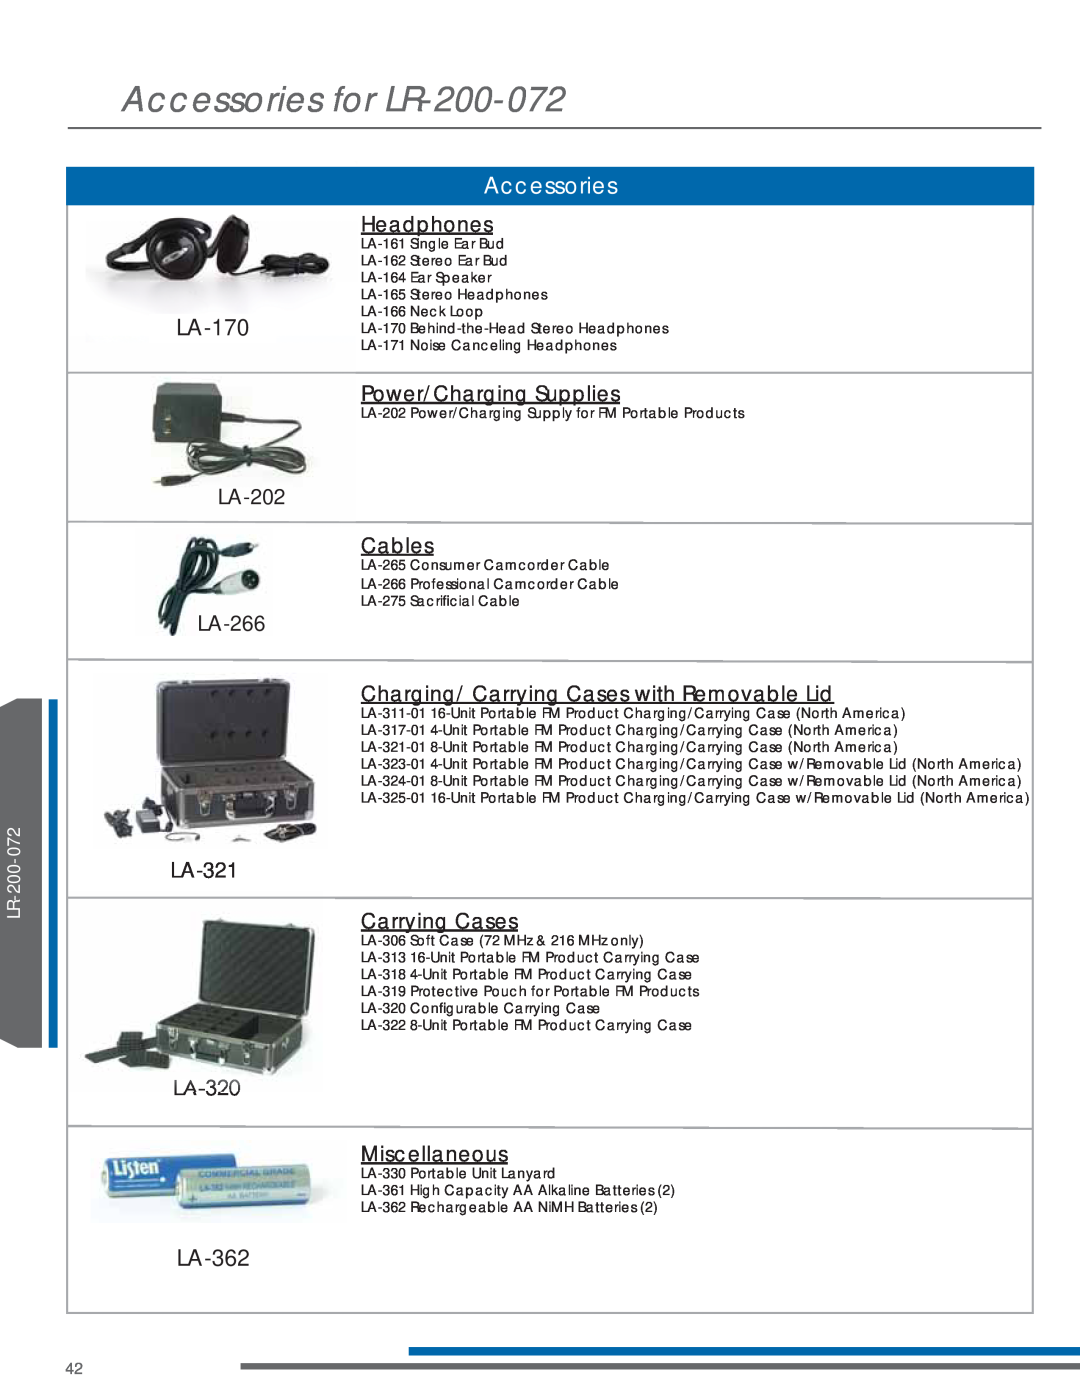 Listen Technologies LA-161 Accessories for LR-200-072, LA-362, Headphones, Power/Charging Supplies, Cables, Carrying Cases 